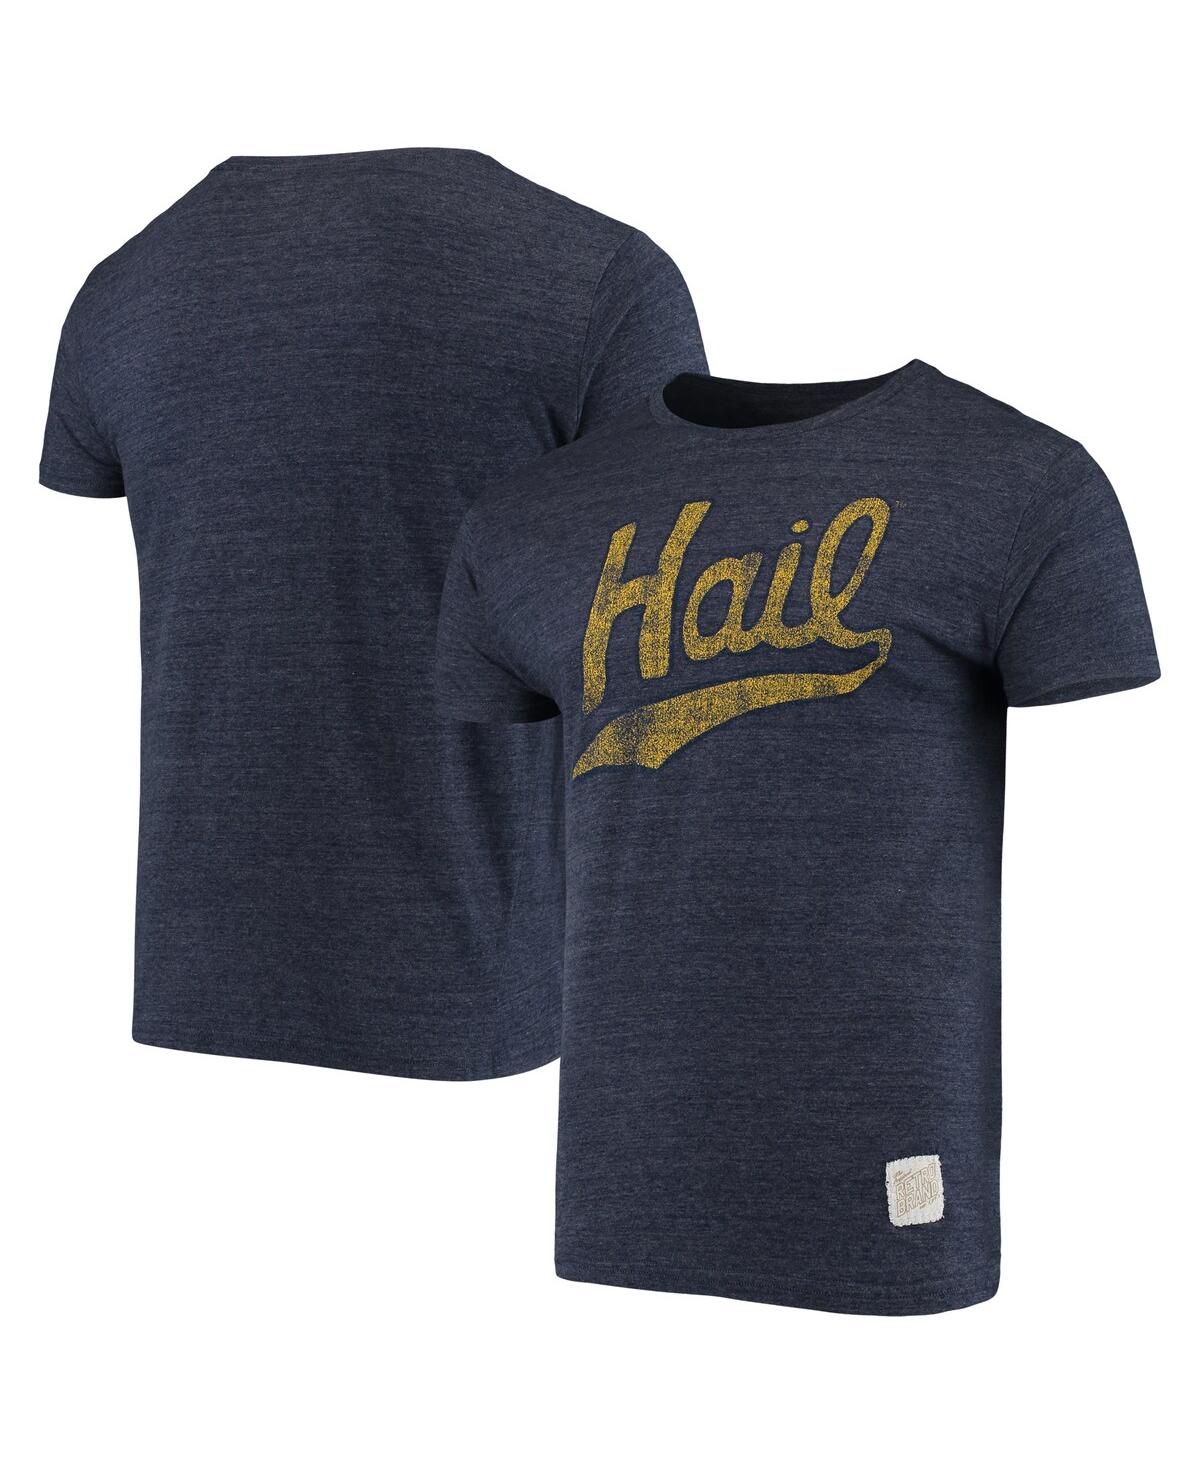 Men's Original Retro Brand Heathered Navy Michigan Wolverines Vintage-Like Hail Tri-Blend T-shirt - Heathered Navy